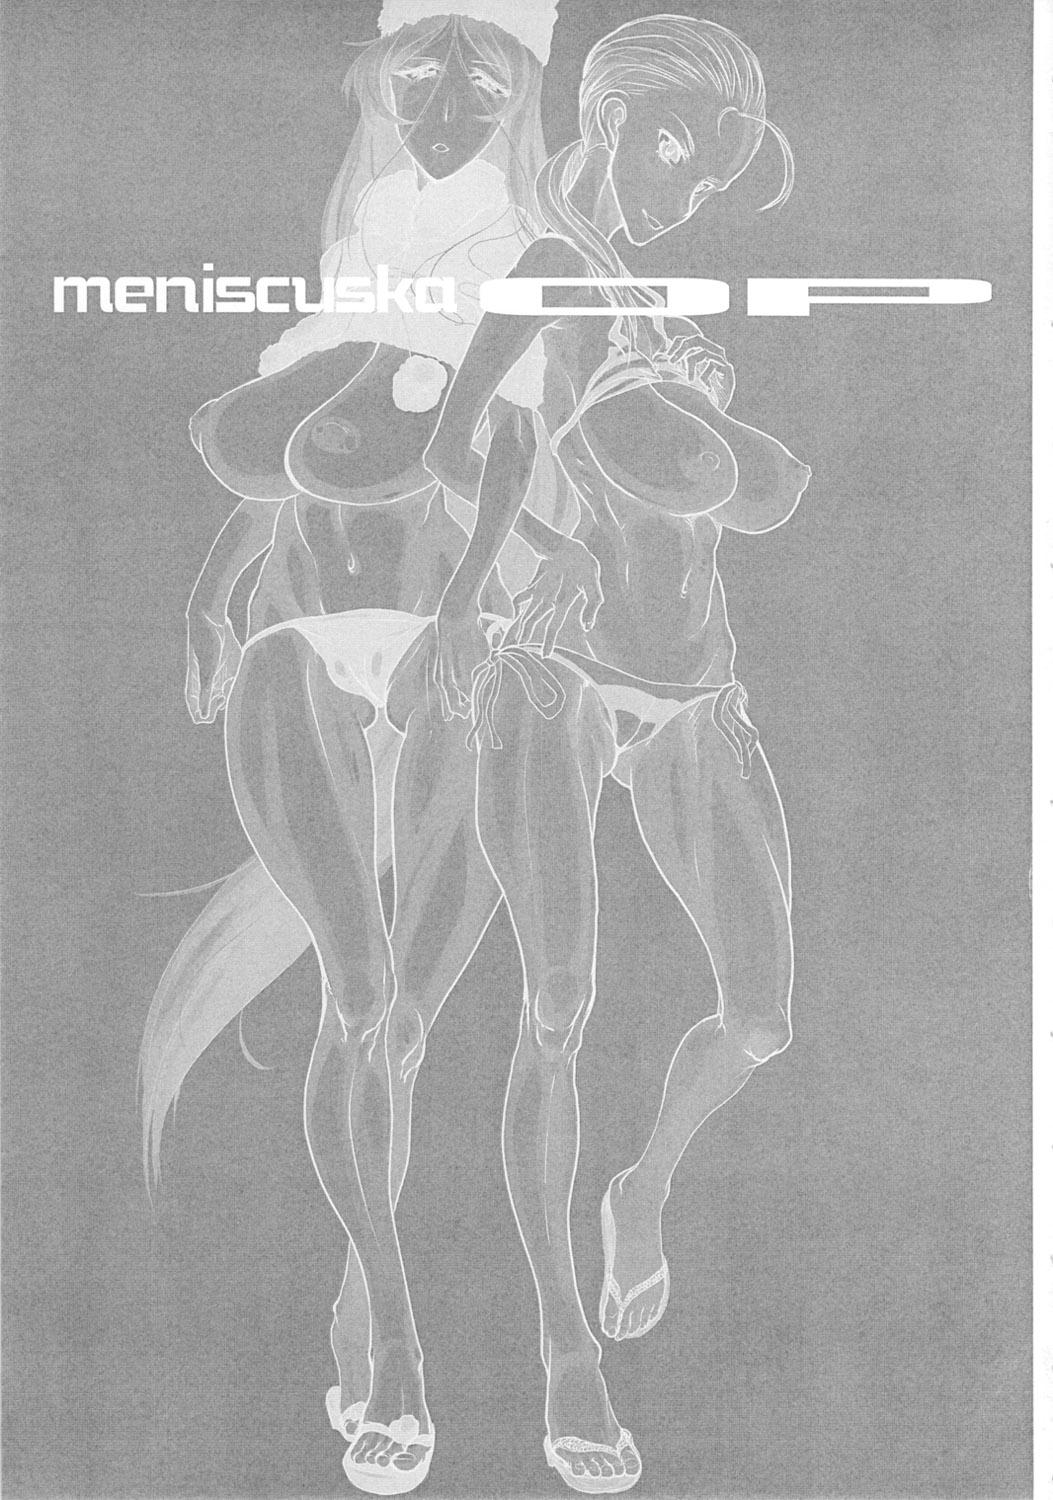 Titten Meniscuska OP - Neon genesis evangelion Galaxy express 999 Pussyfucking - Page 2